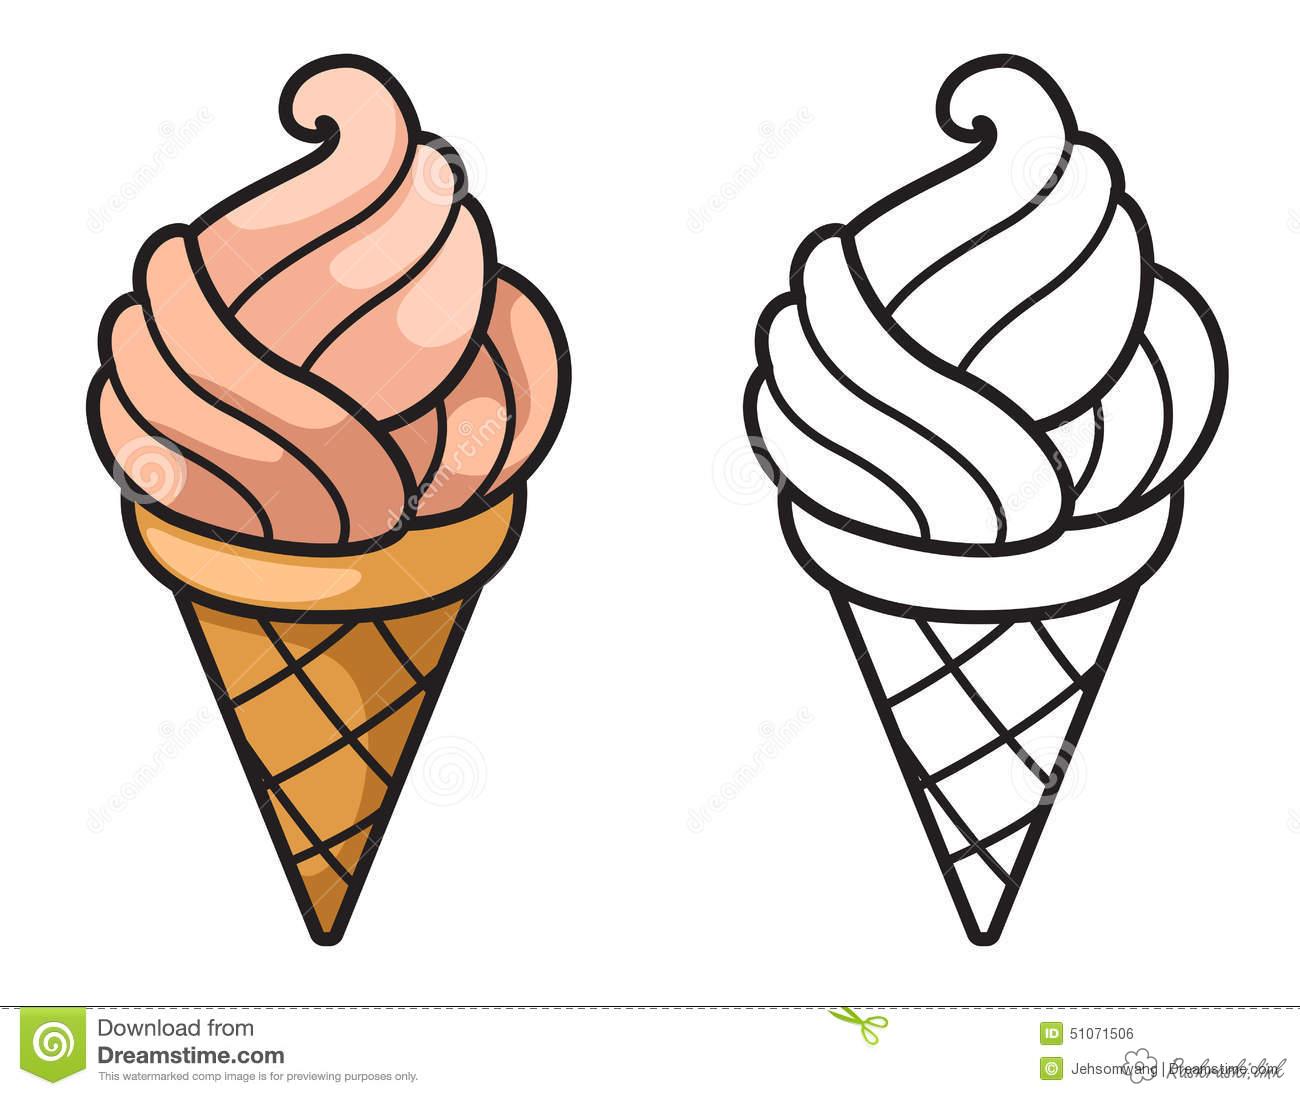 Розмальовки Морозиво Розмальовки, гра для дітей, полуничне, морозиво, вафельний стаканчик